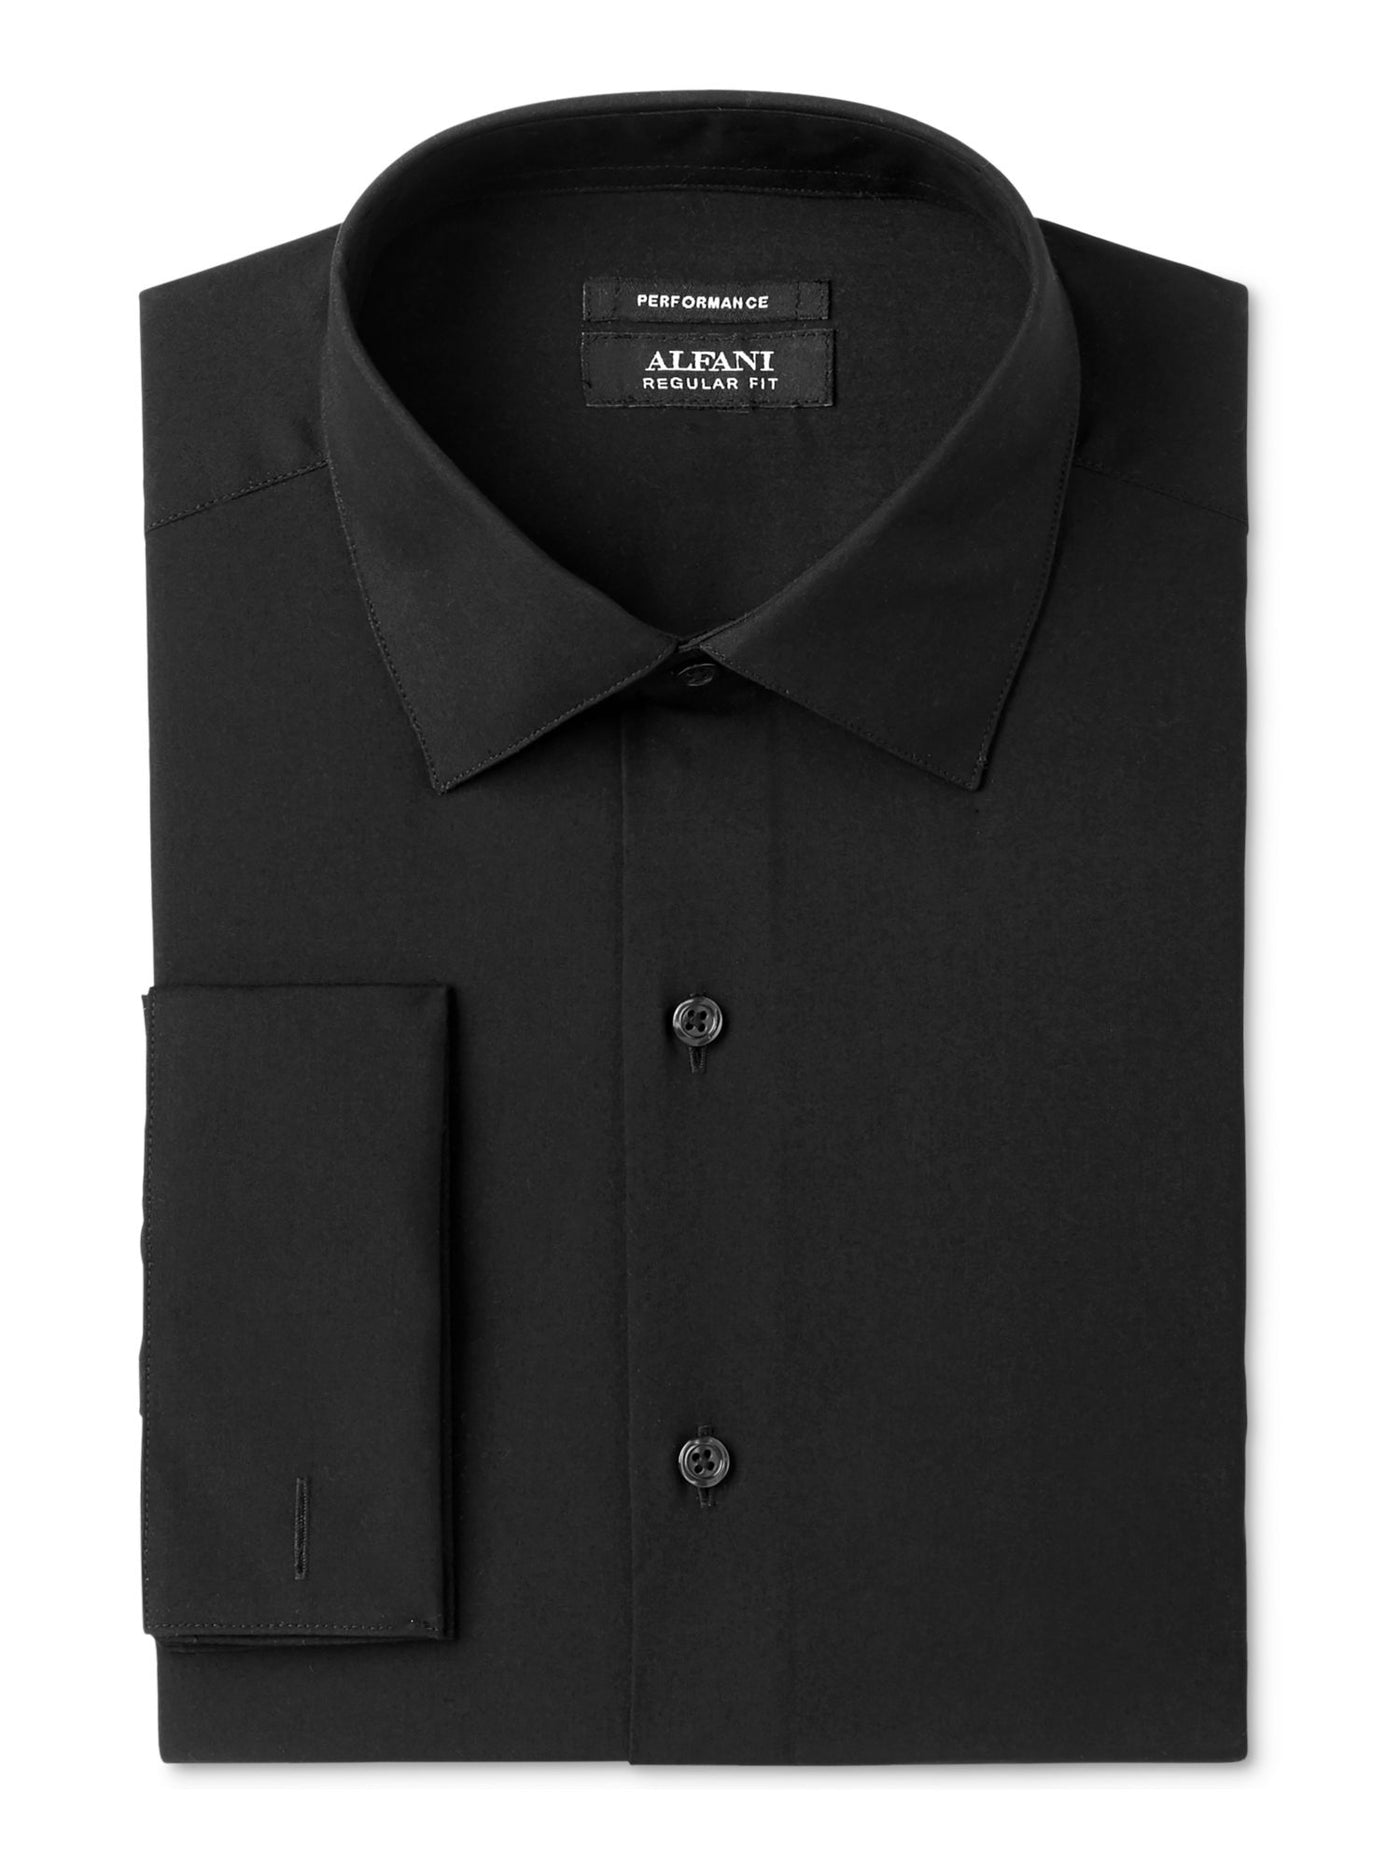 ALFANI Mens Black Spread Collar Slim Fit Button Down Shirt XL 17-17.5 36\37